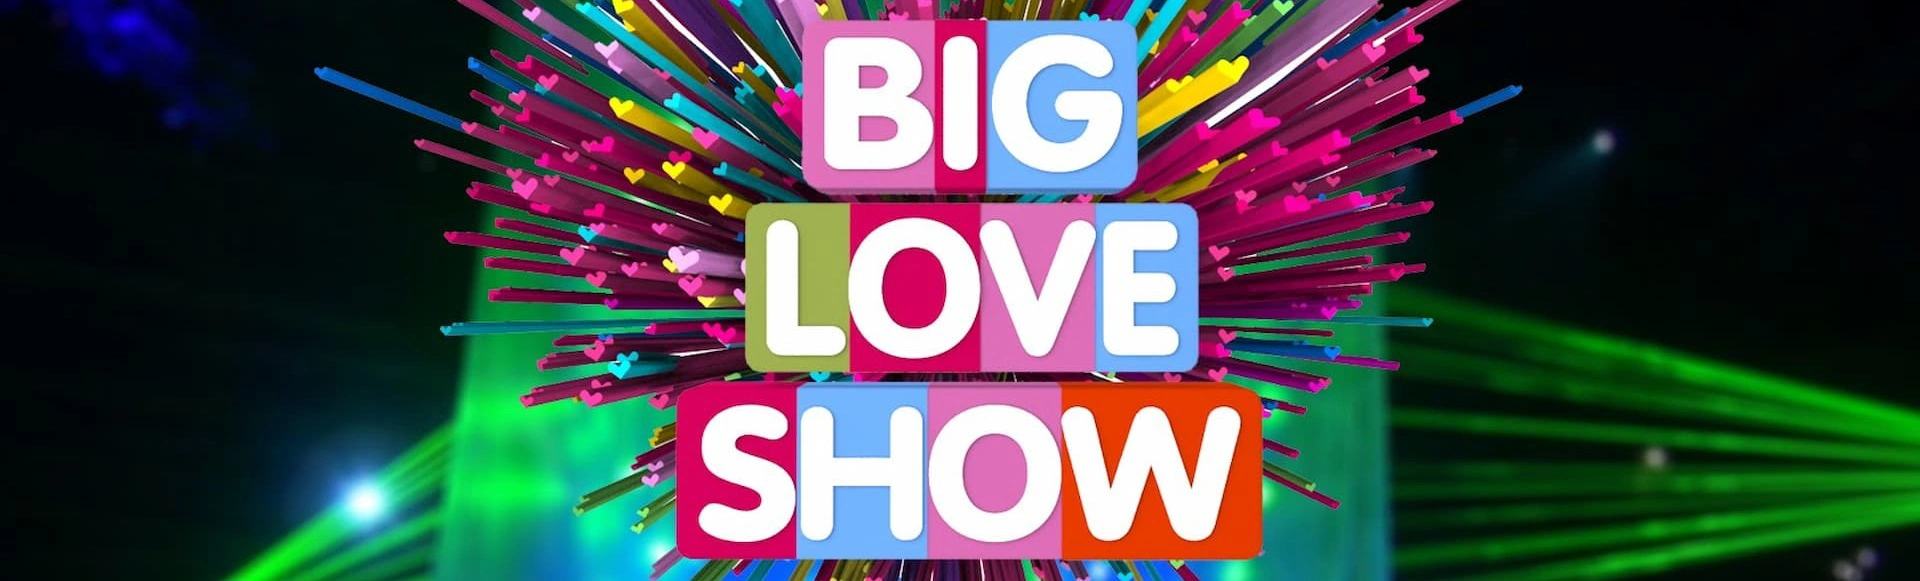 Big Love Show!